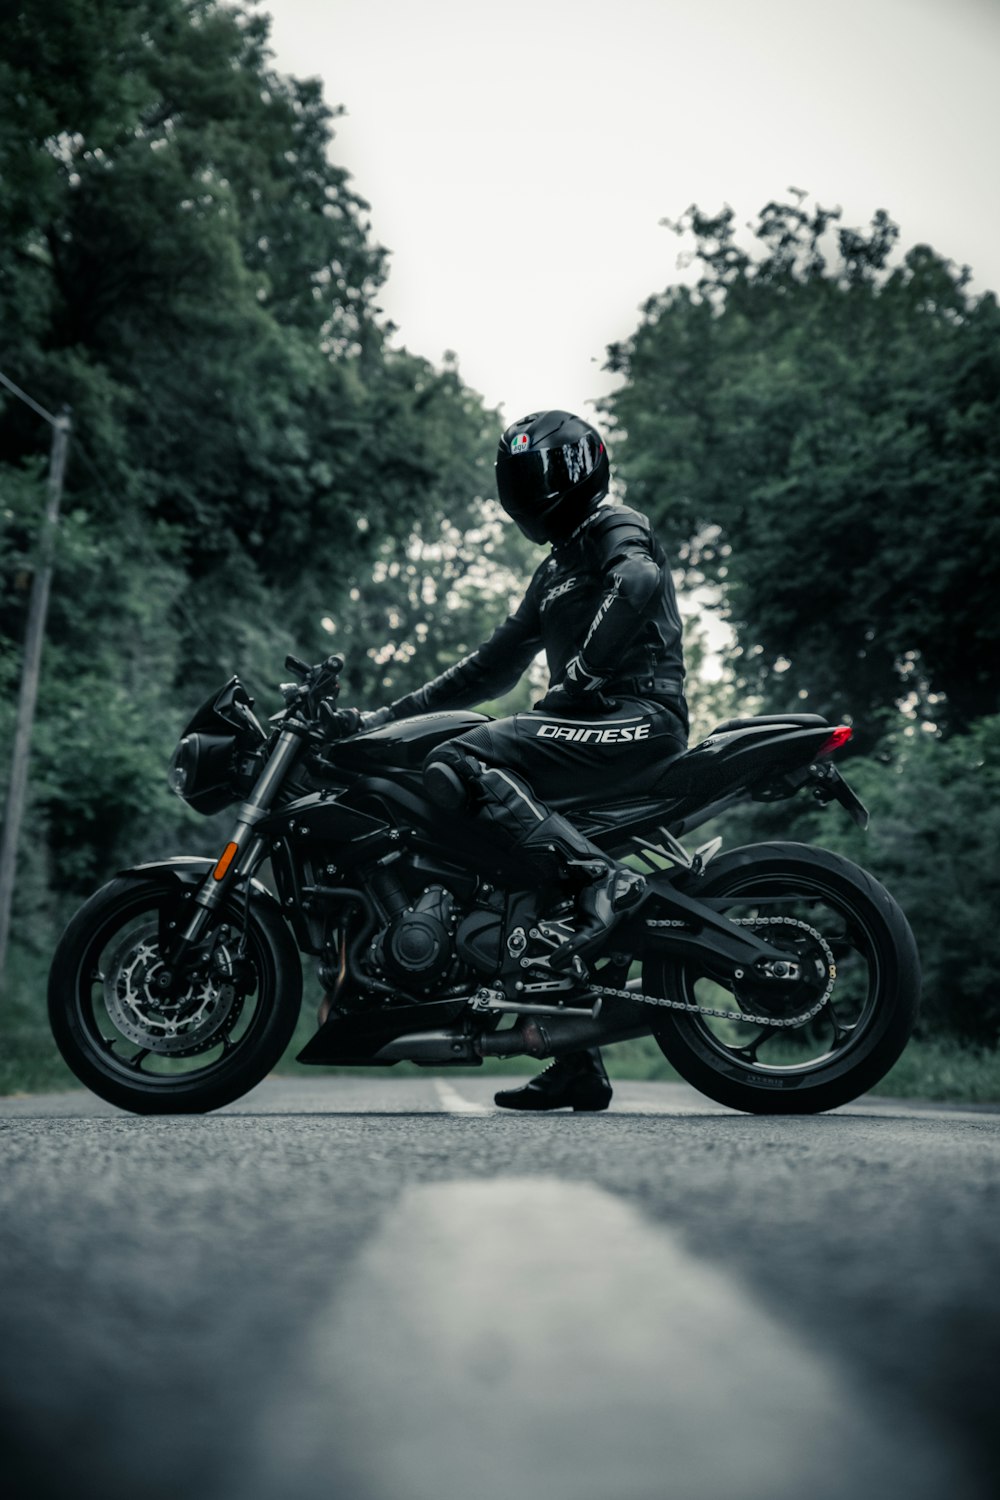 Mann in schwarzem Motorradhelm fährt tagsüber Motorrad